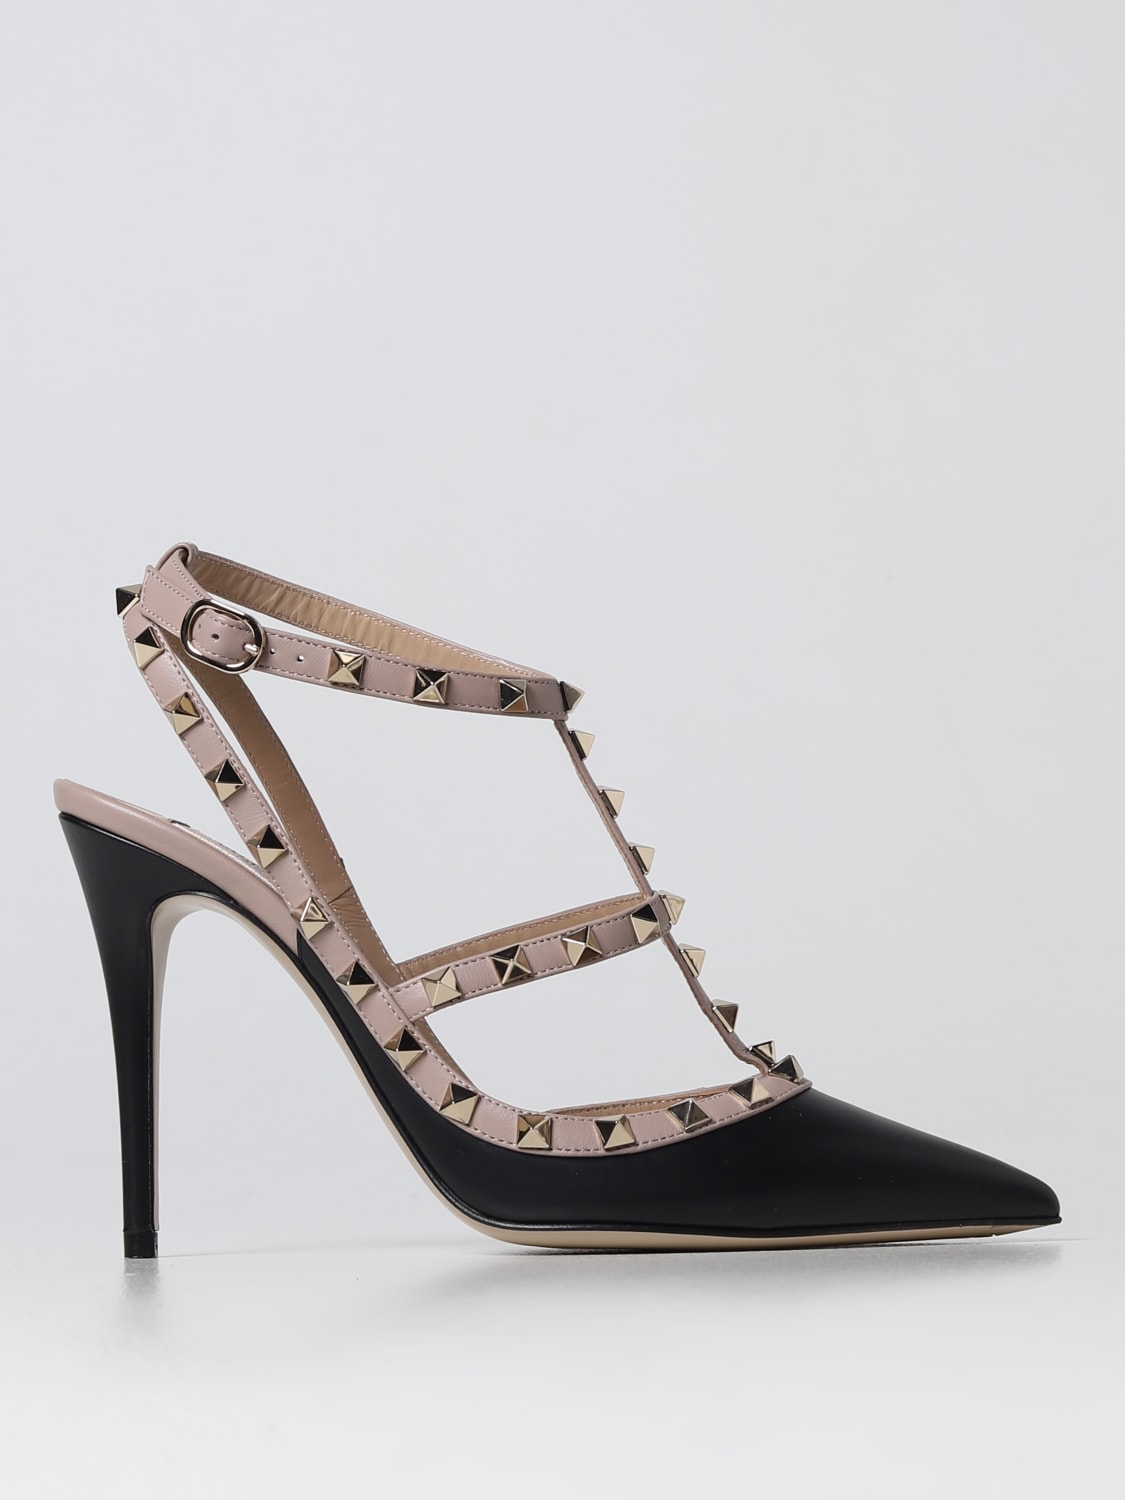 GARAVANI: leather pumps with Studs | Garavani high heel shoes 2W2S0393VOD online on GIGLIO.COM